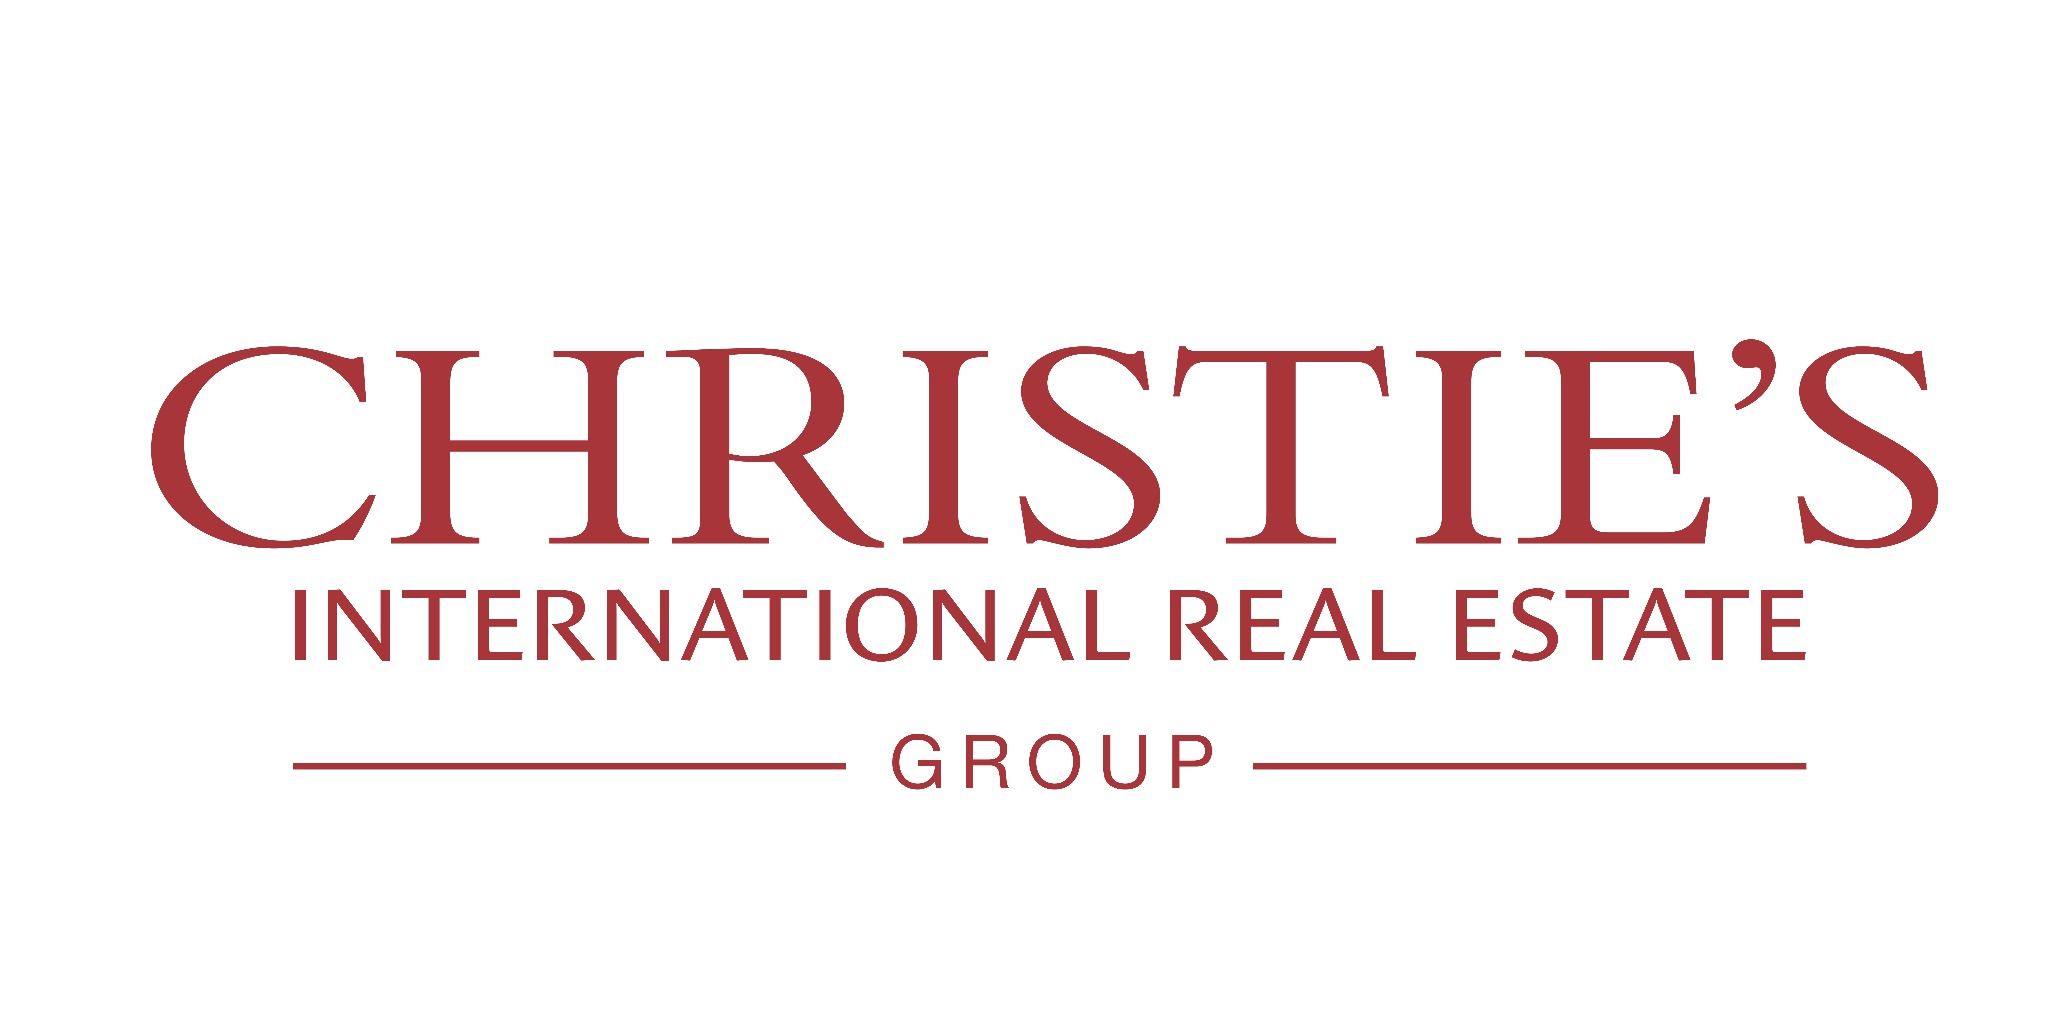  Christie’s International Real Estate Group